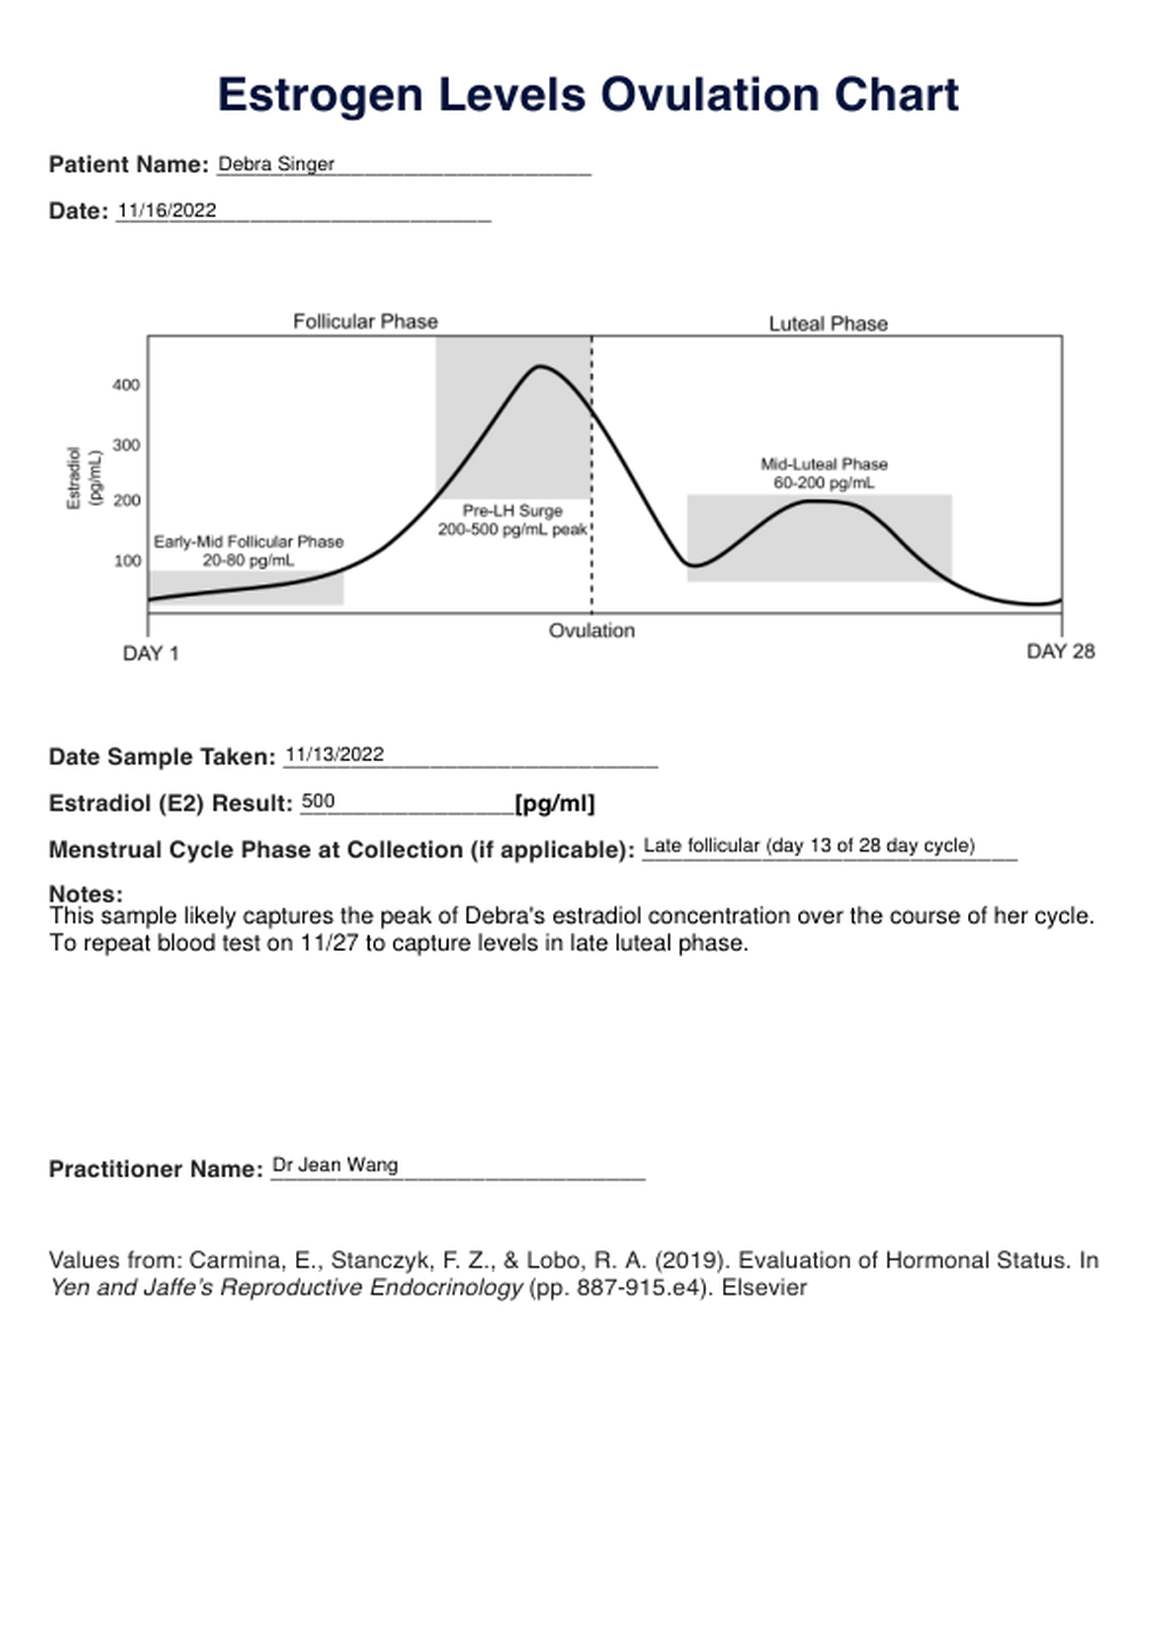  Estrogen Levels Ovulation PDF Example